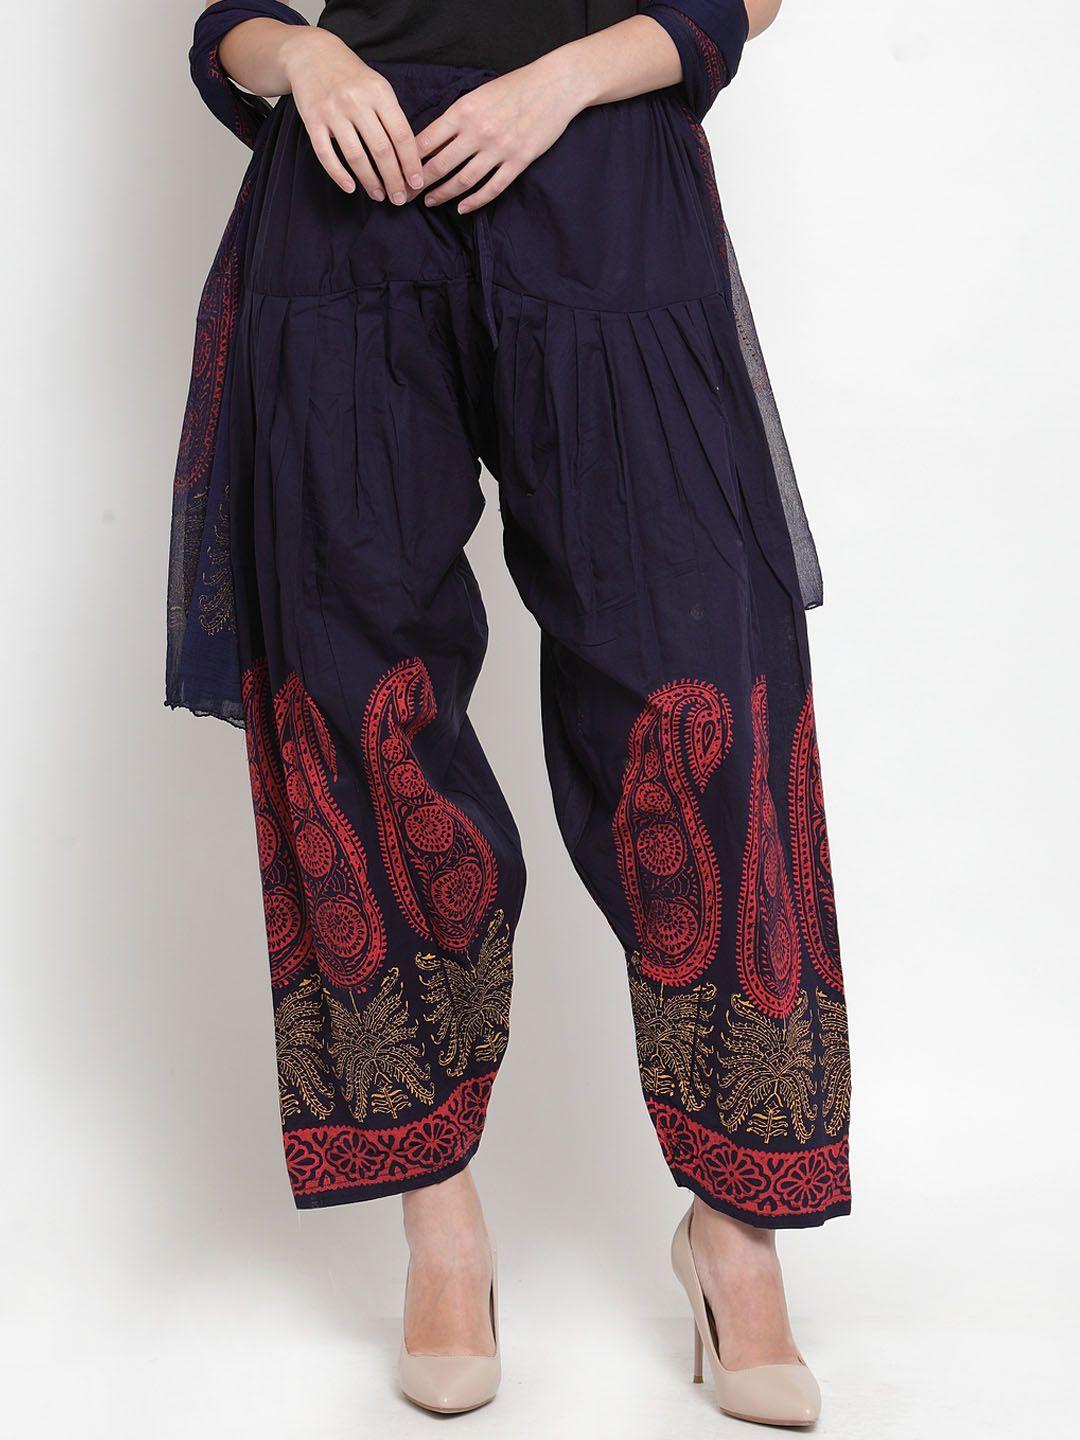 clora creation women navy blue & red printed salwar & dupatta set